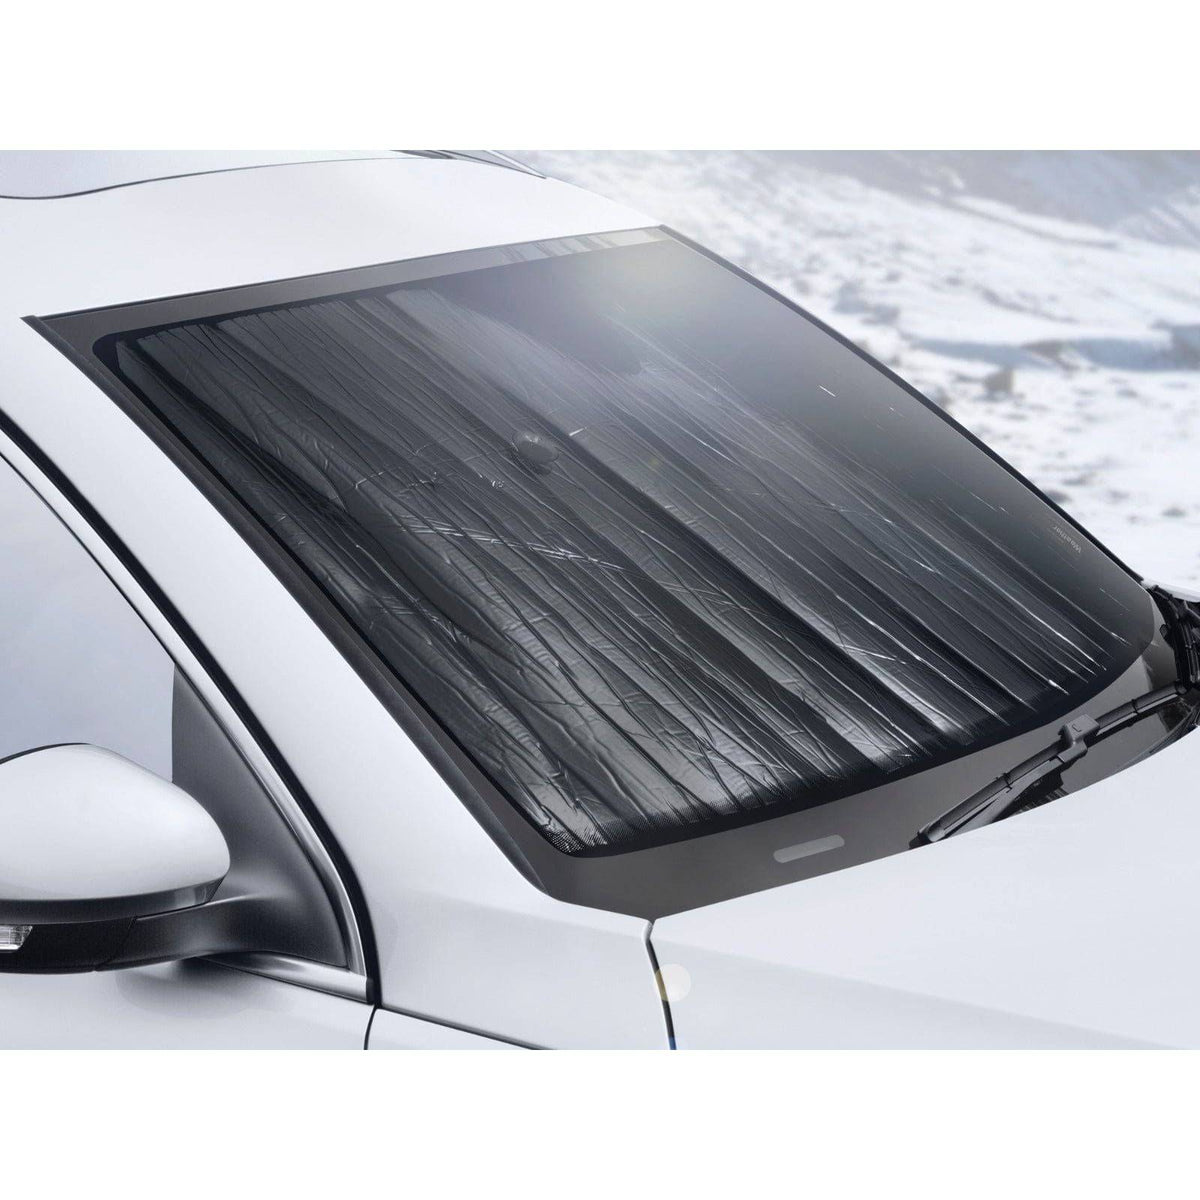 WeatherTech SunShades XC60 (2017-2023) Full Sunshade Kit Kofferraumwanne sonnenschutz auto auto fußmatten